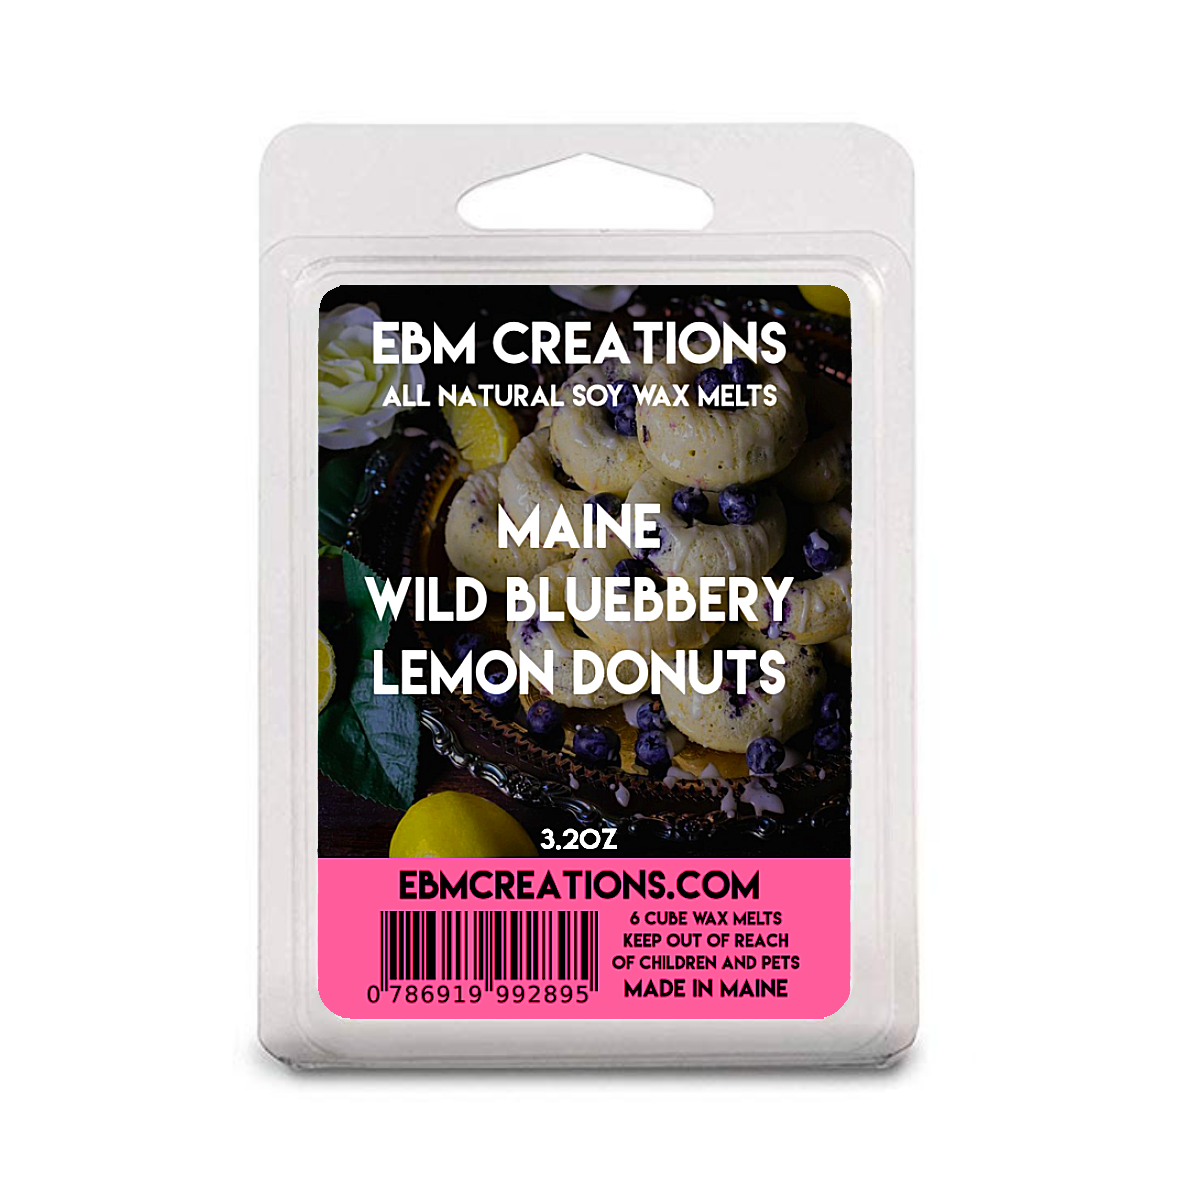 Maine Wild Blueberry Lemon Donuts - 3.2 oz Clamshell